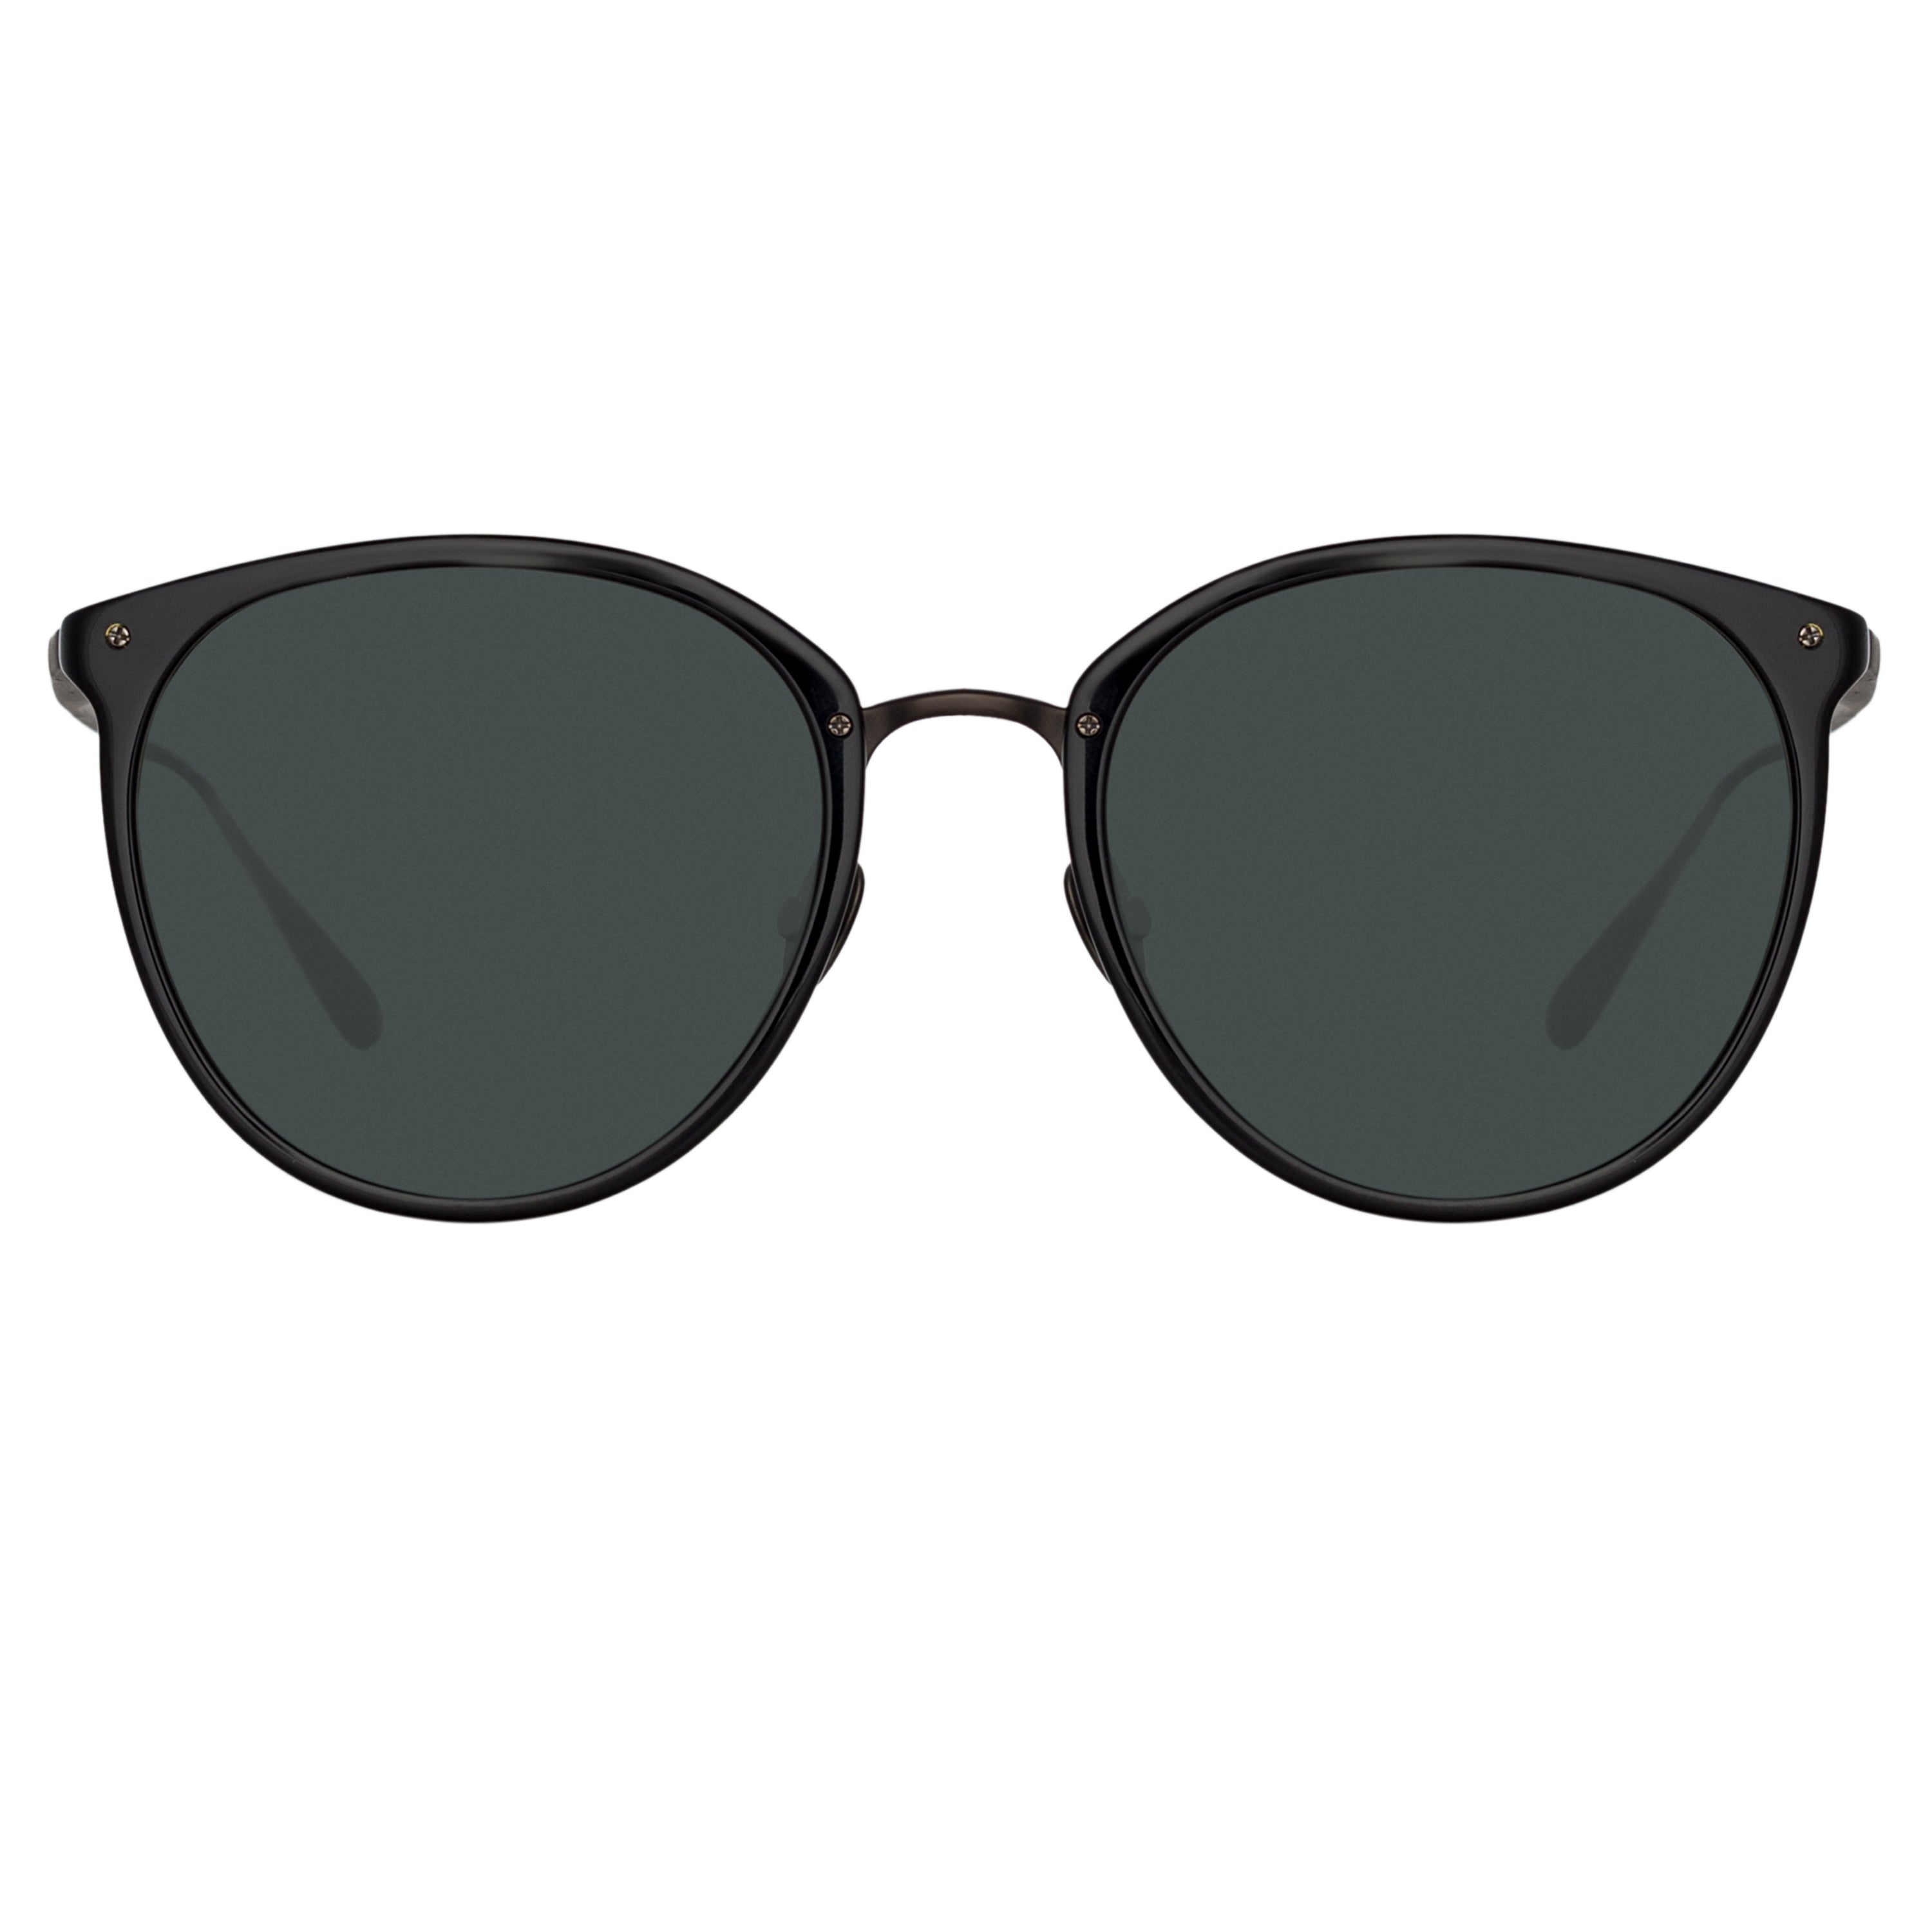 Calthorpe Oval Sunglasses in Black and Matt Nickel (Men’s)